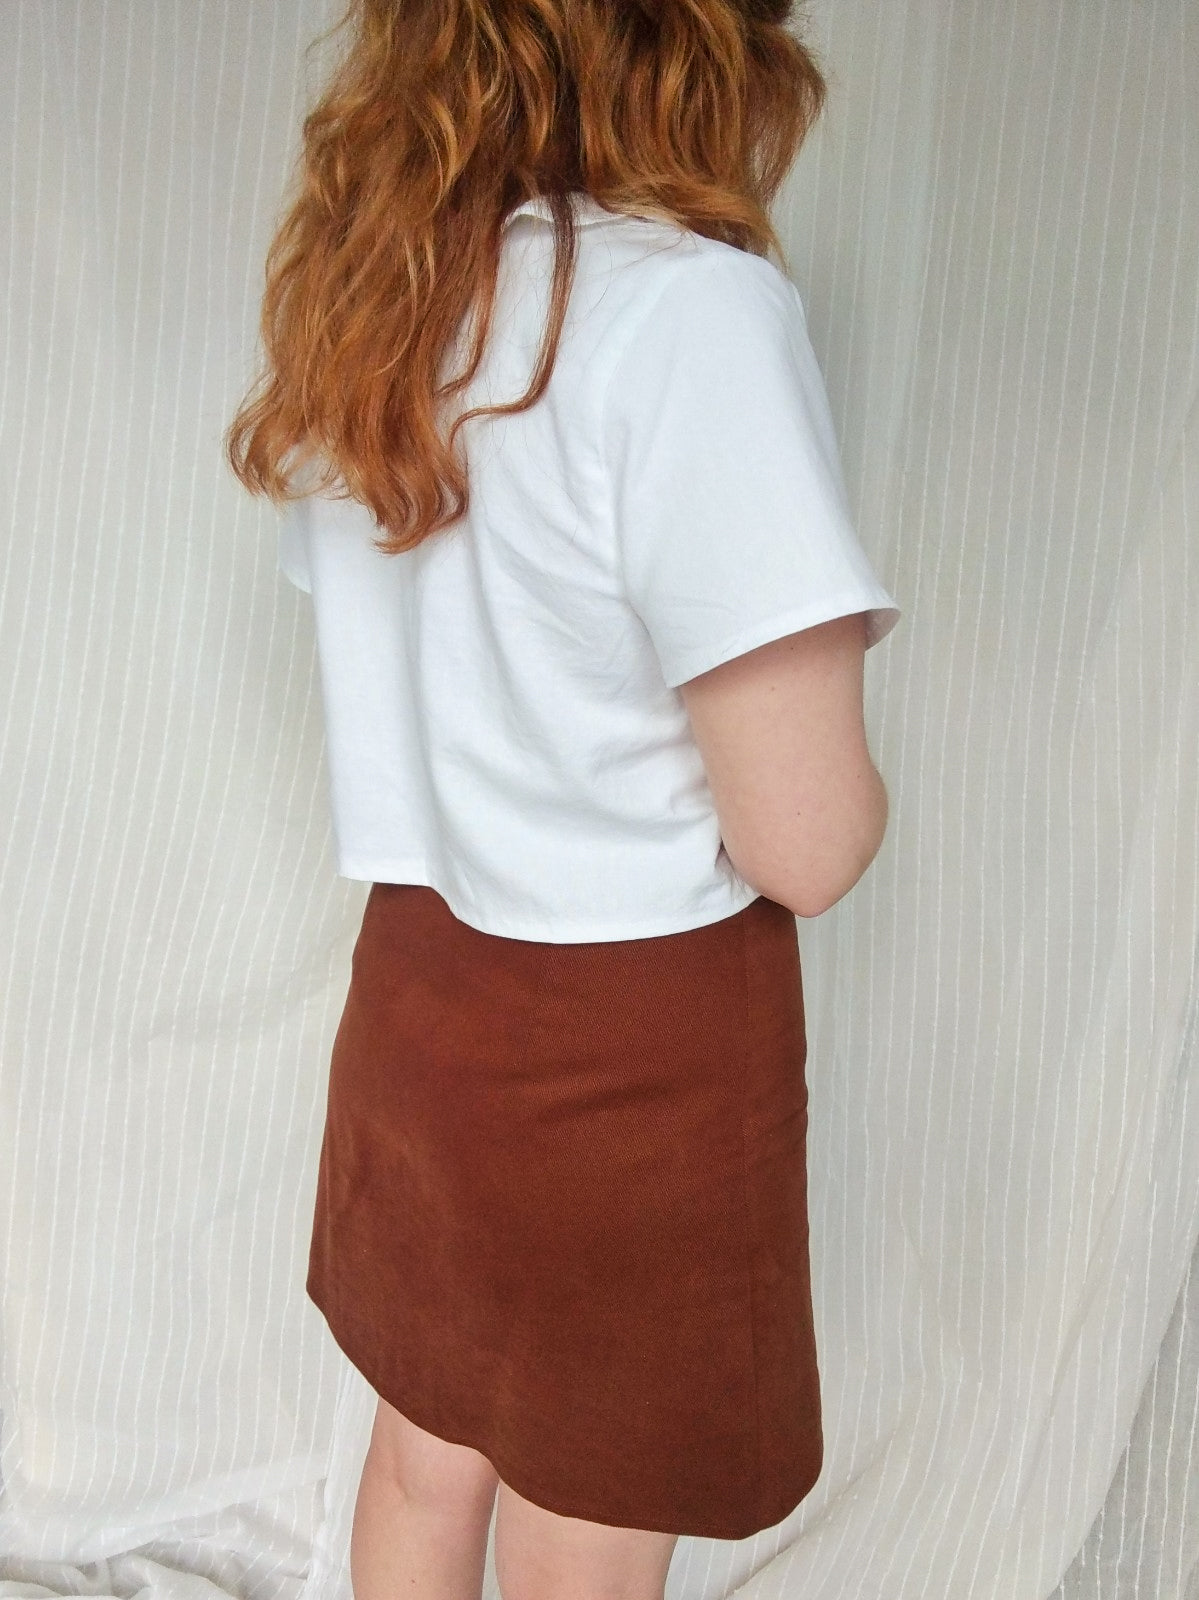 Marais Mini Skirt